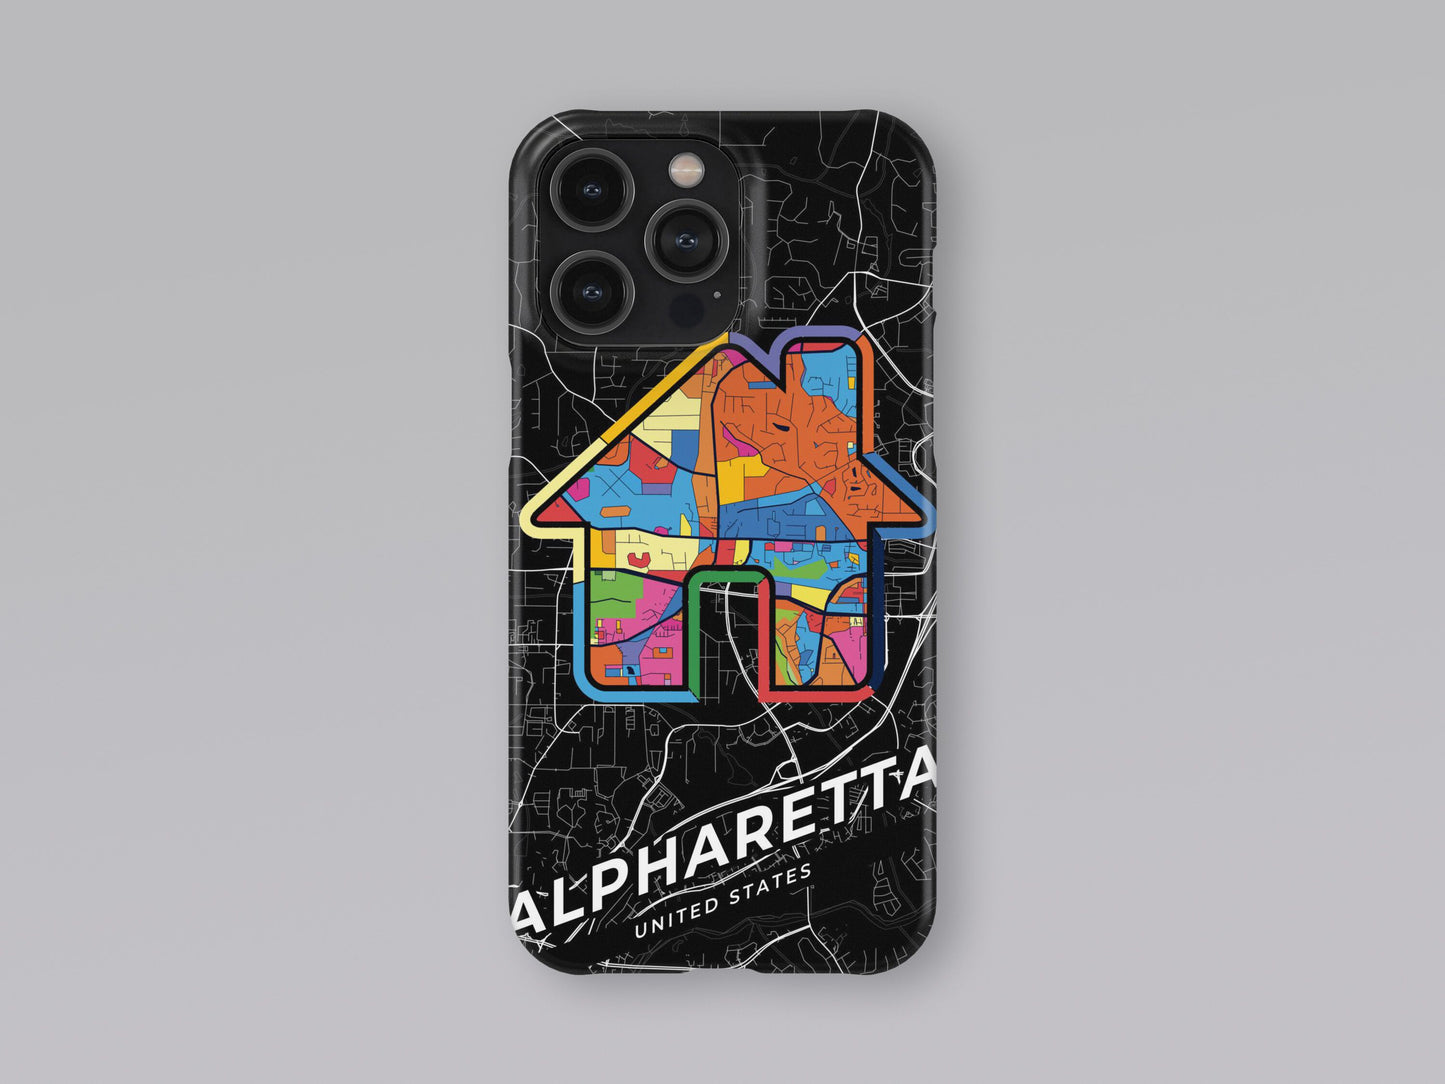 Alpharetta Georgia slim phone case with colorful icon. Birthday, wedding or housewarming gift. Couple match cases. 3